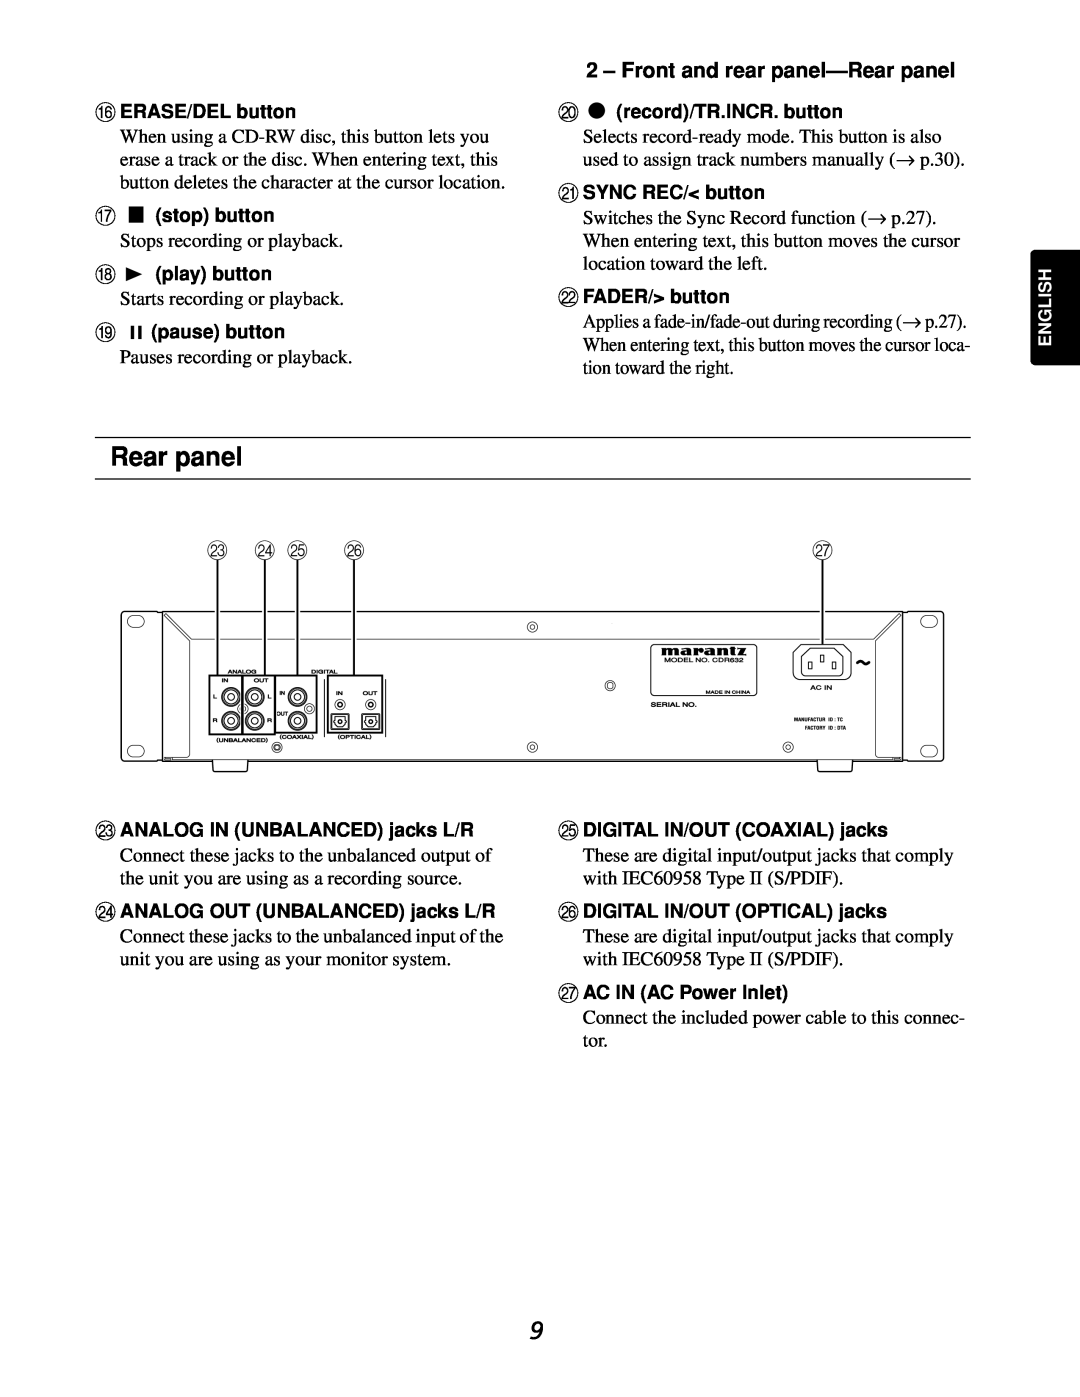 Marantz CDR632 manual Rear panel, Front and rear panel-Rearpanel, M N O, FERASE/DEL button, Gstop button, H play button 